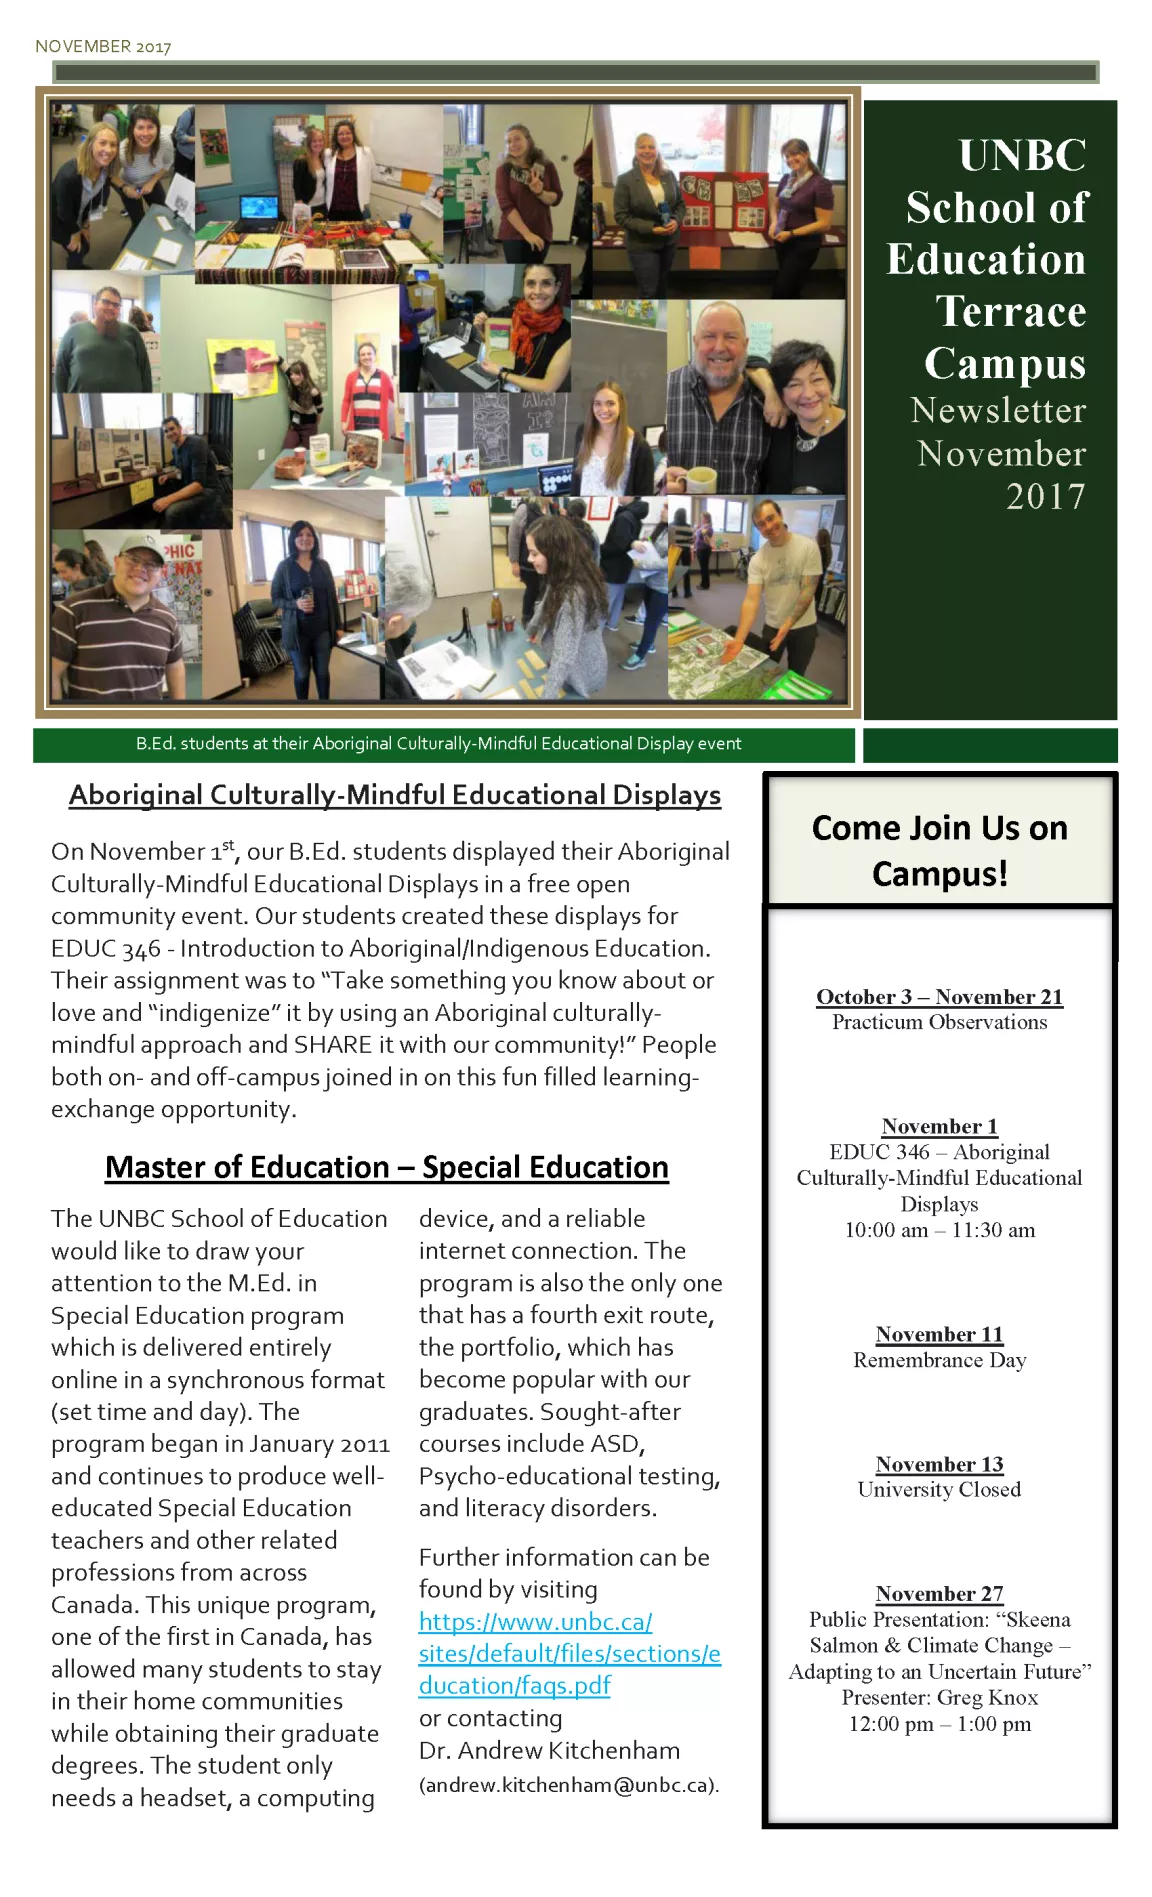 Bachelor of Education November 2017 Newsletter - Page 1/2